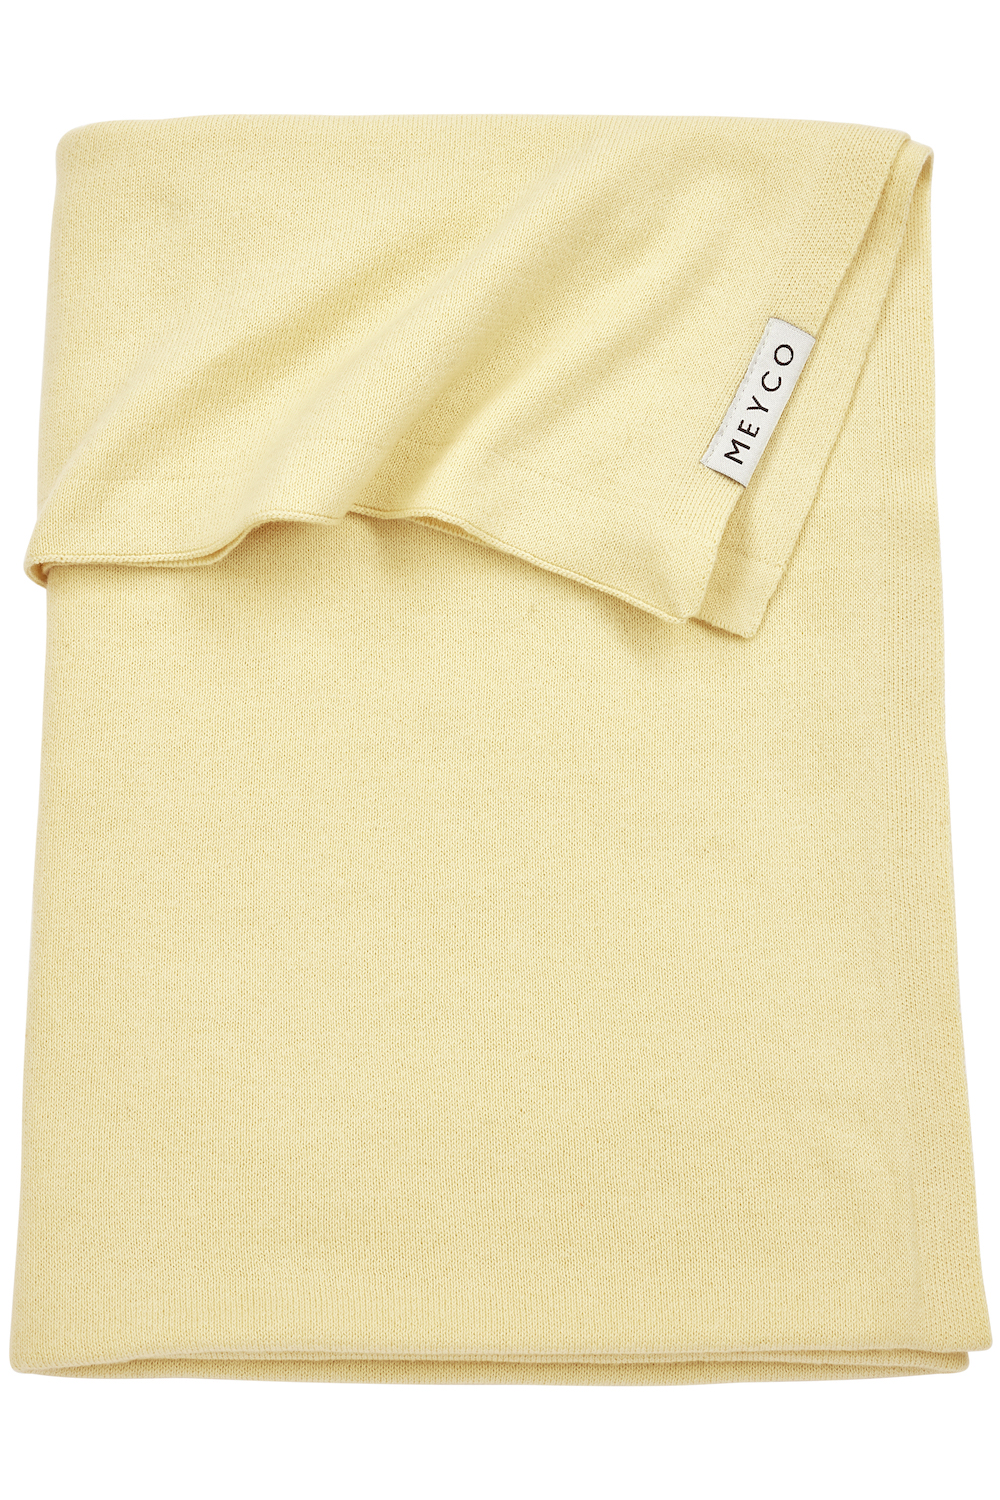 Babydecke groß Knit Basic - soft yellow - 100x150cm